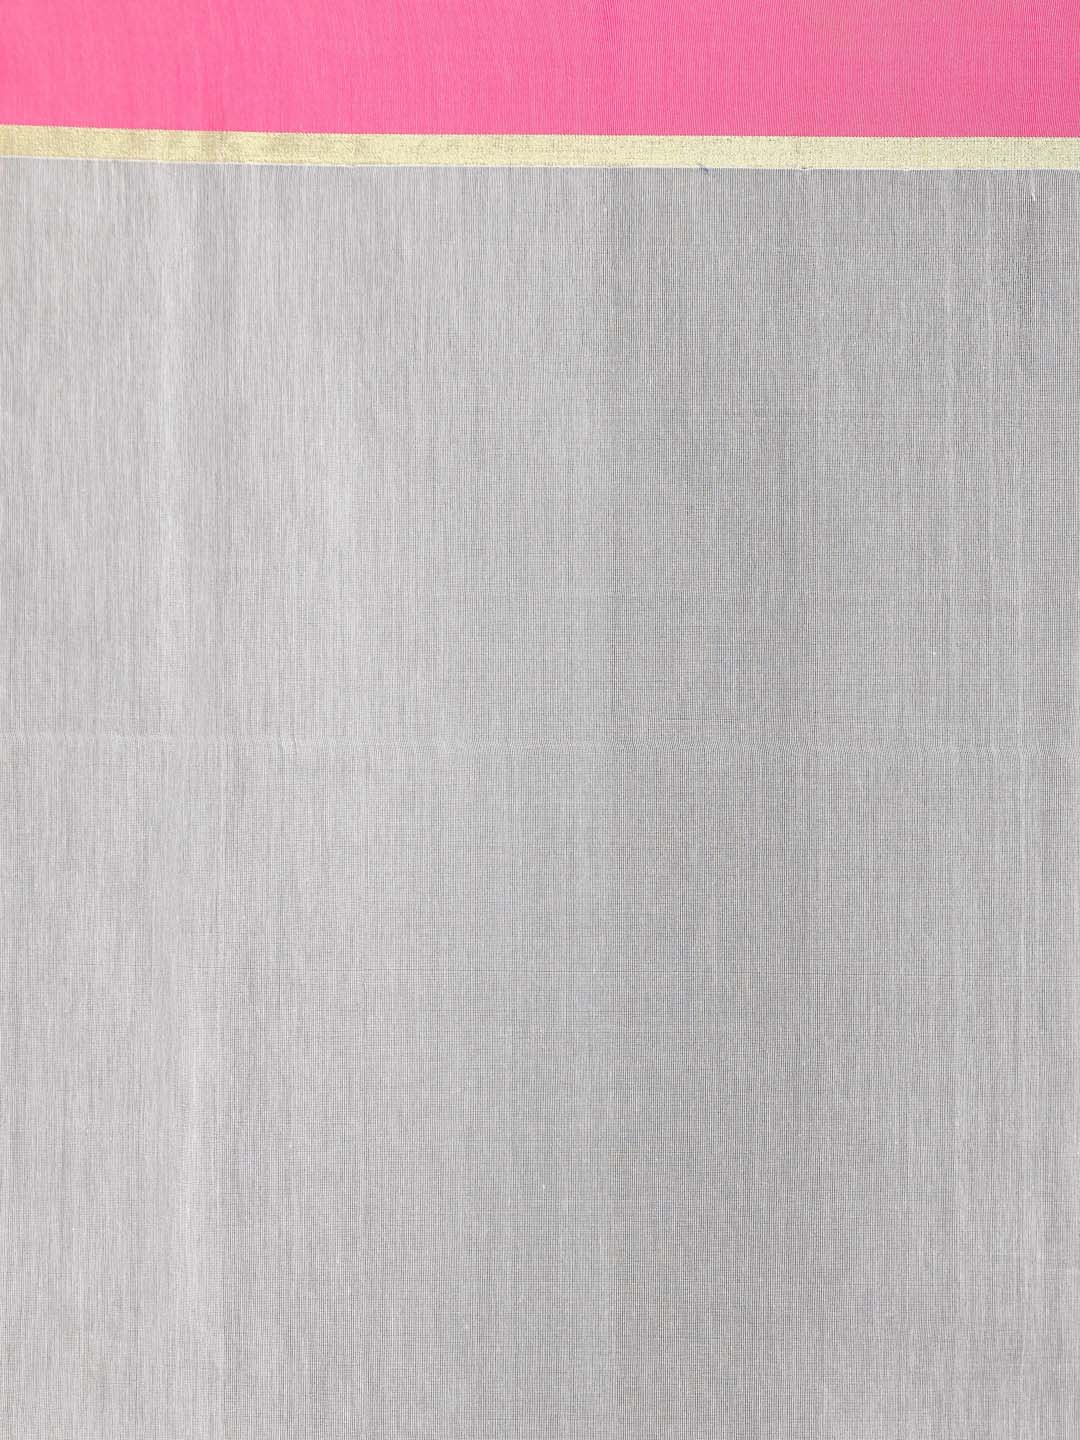 Indethnic White Bengal Handloom Cotton Blend Work Saree - Saree Detail View